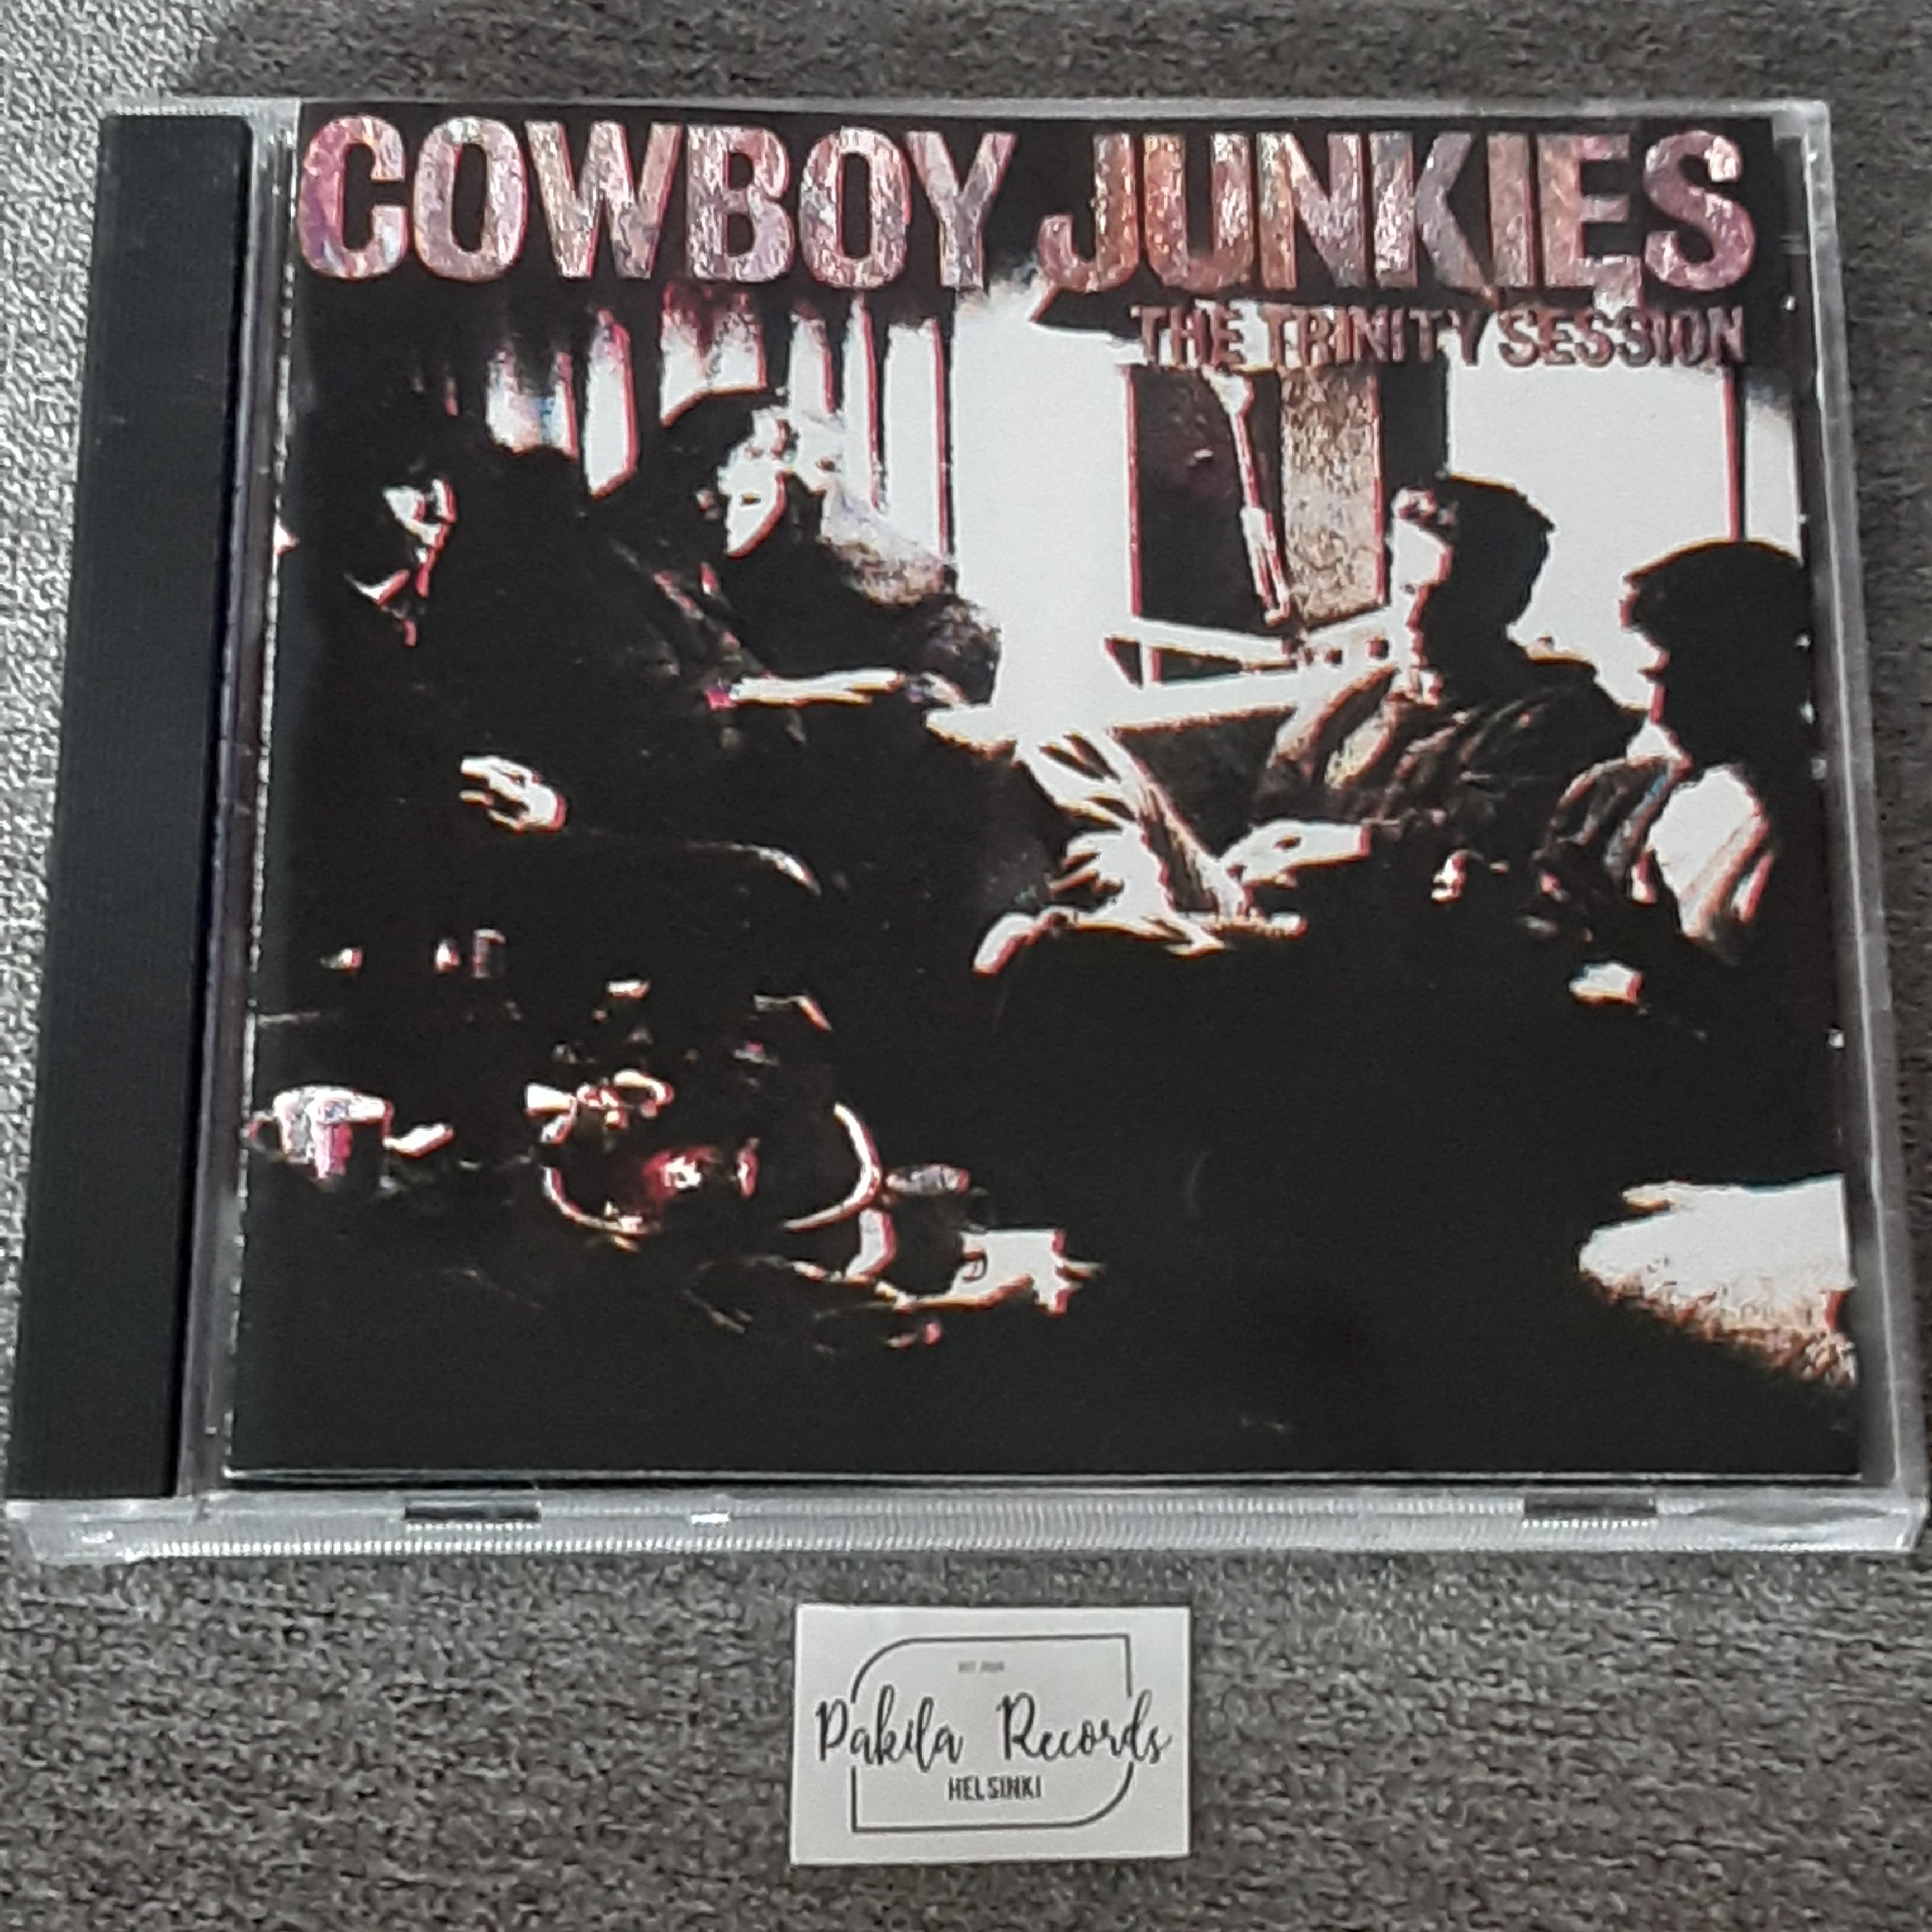 Cowboy Junkies - The Trinity Session - CD (käytetty